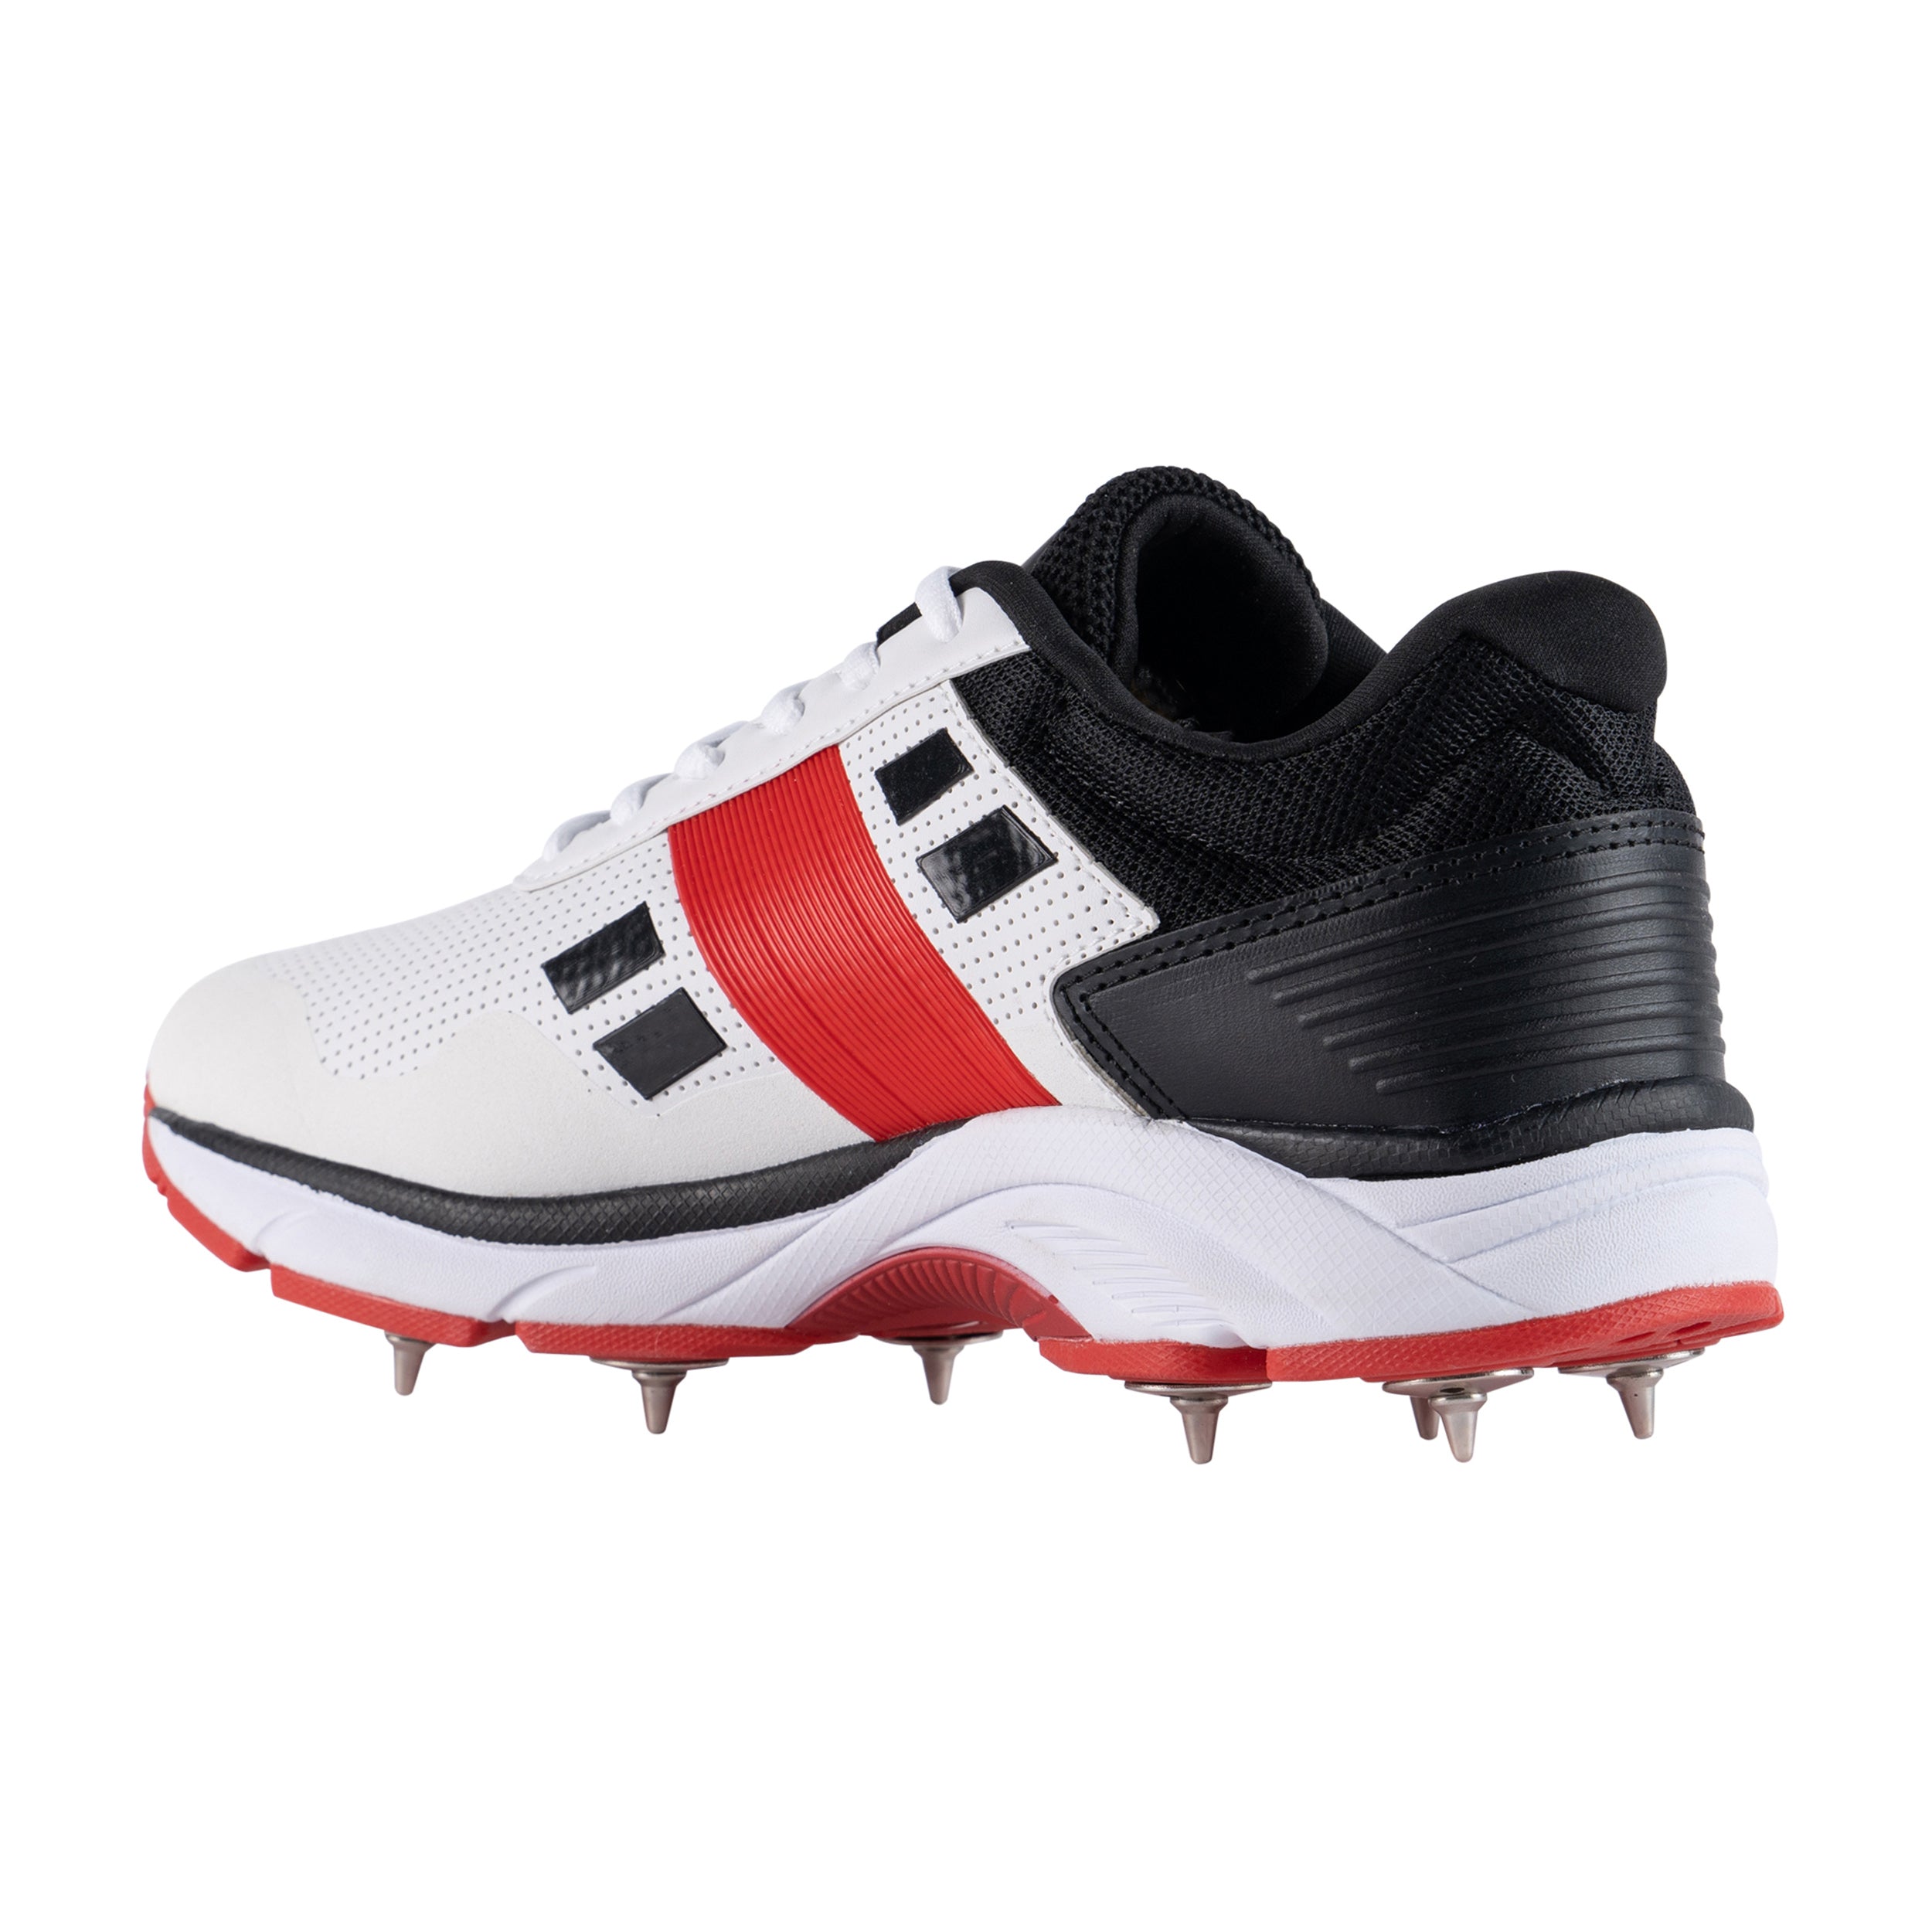 Gray Nicolls Velocity 4.0 Full Spike Cricket Shoes - Junior